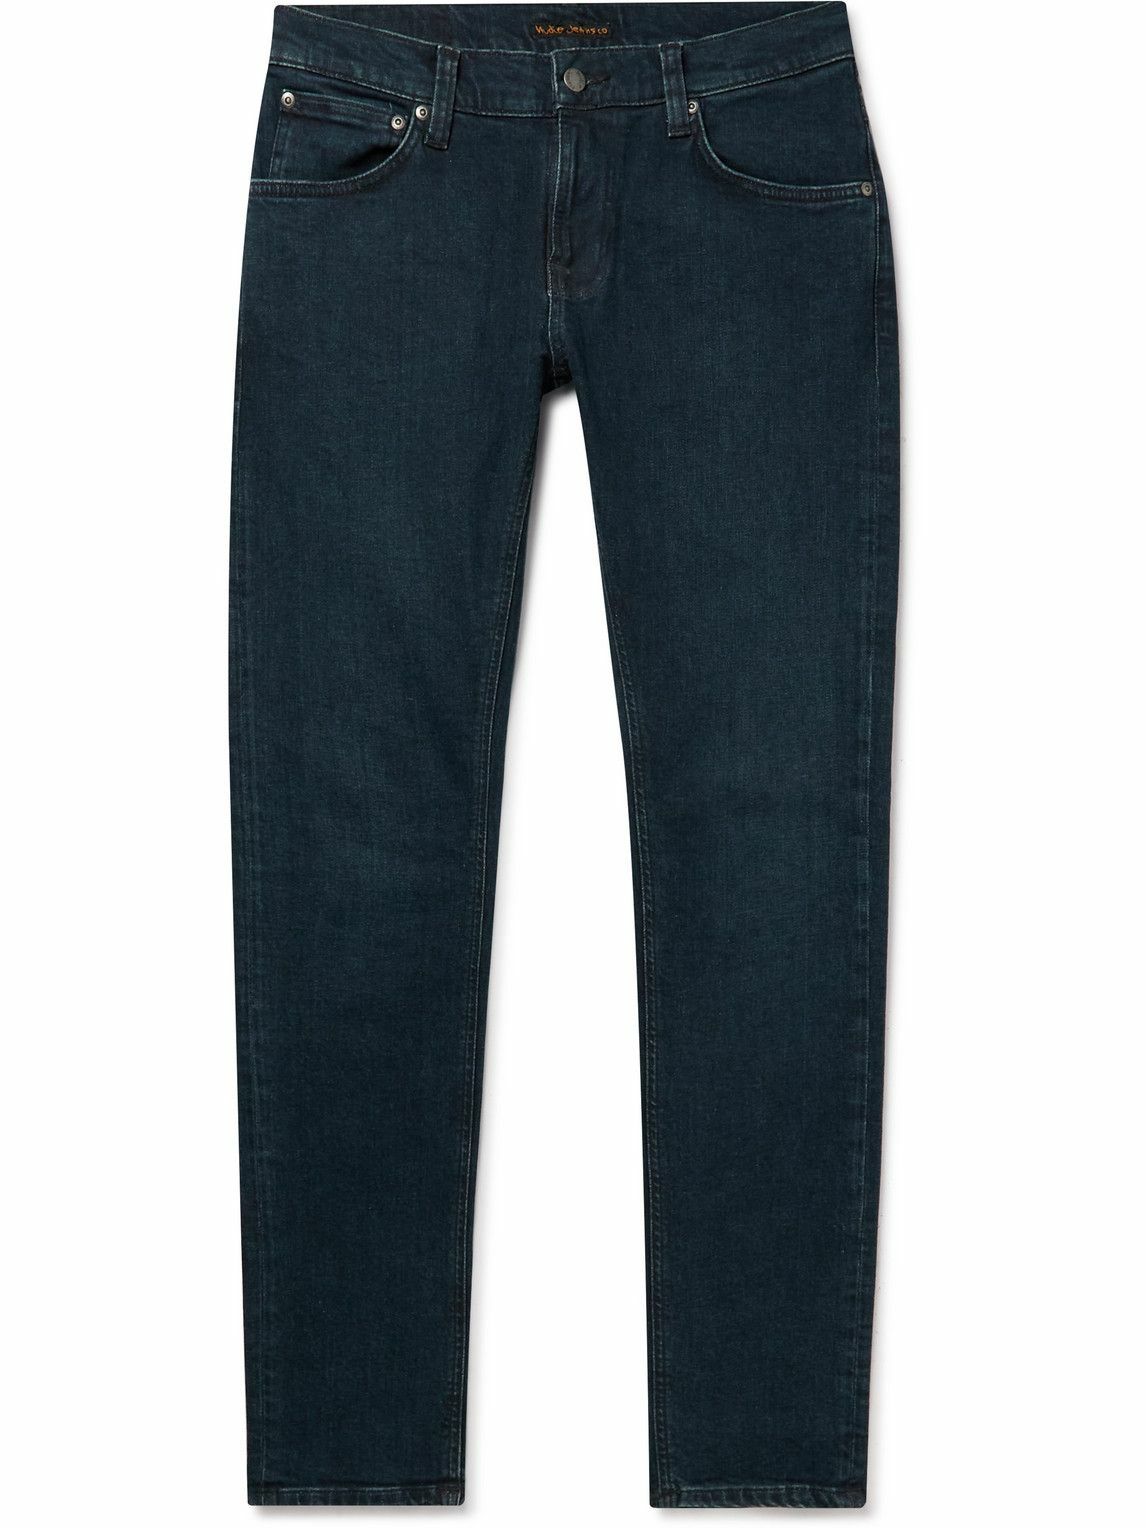 Nudie Jeans - Tight Terry Skinny-Fit Organic Jeans - Blue Nudie Jeans Co